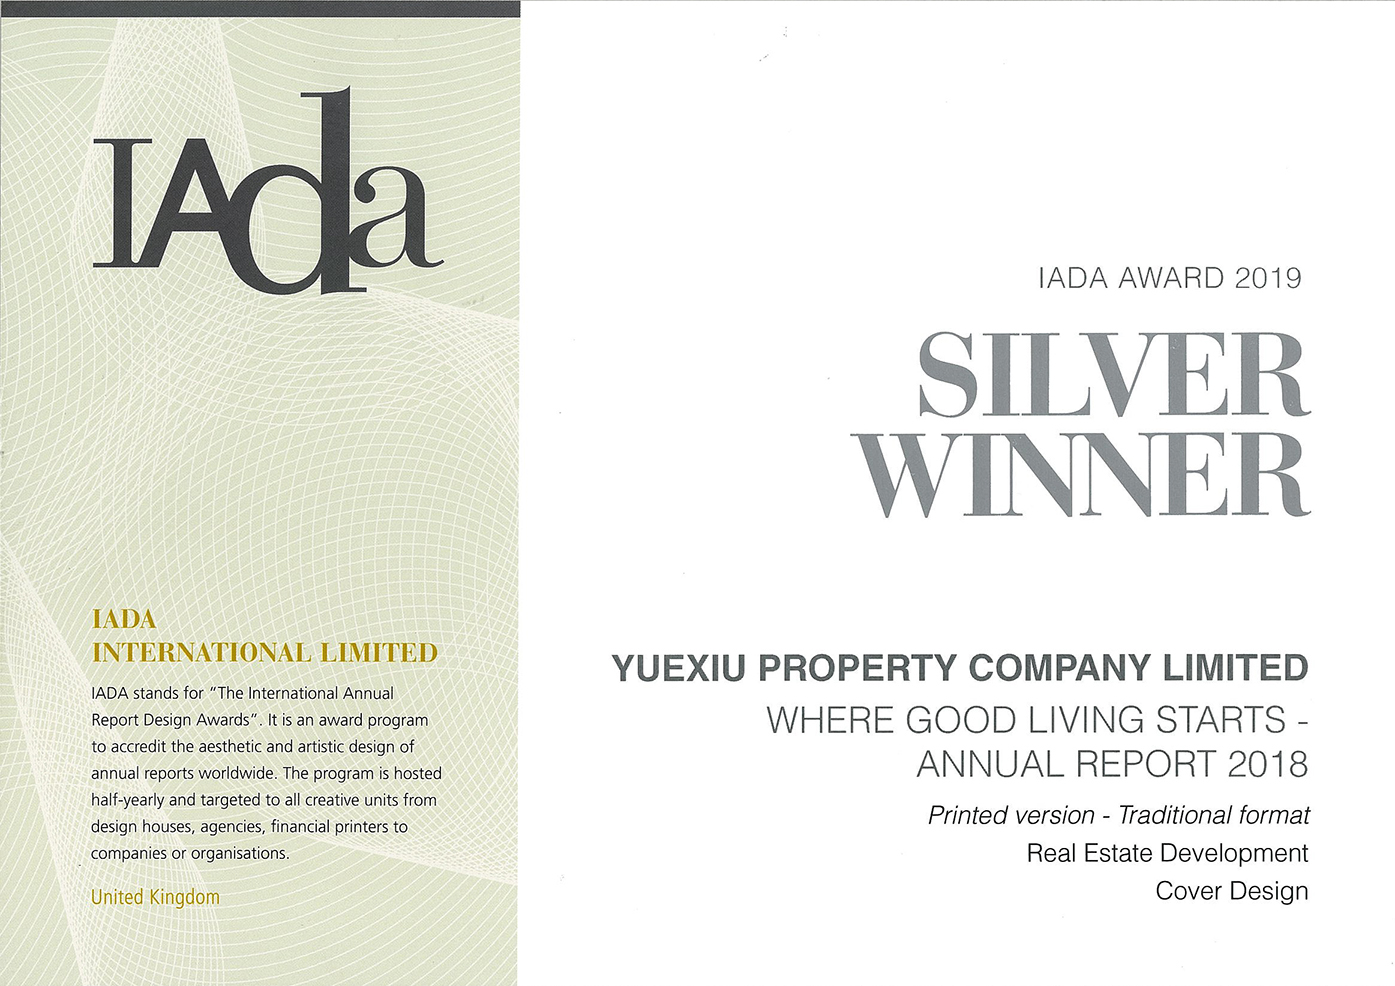 YUEXIU PROPERTY COMPANY LIMITED – IADA AWARD 2019 SILVER WINNER